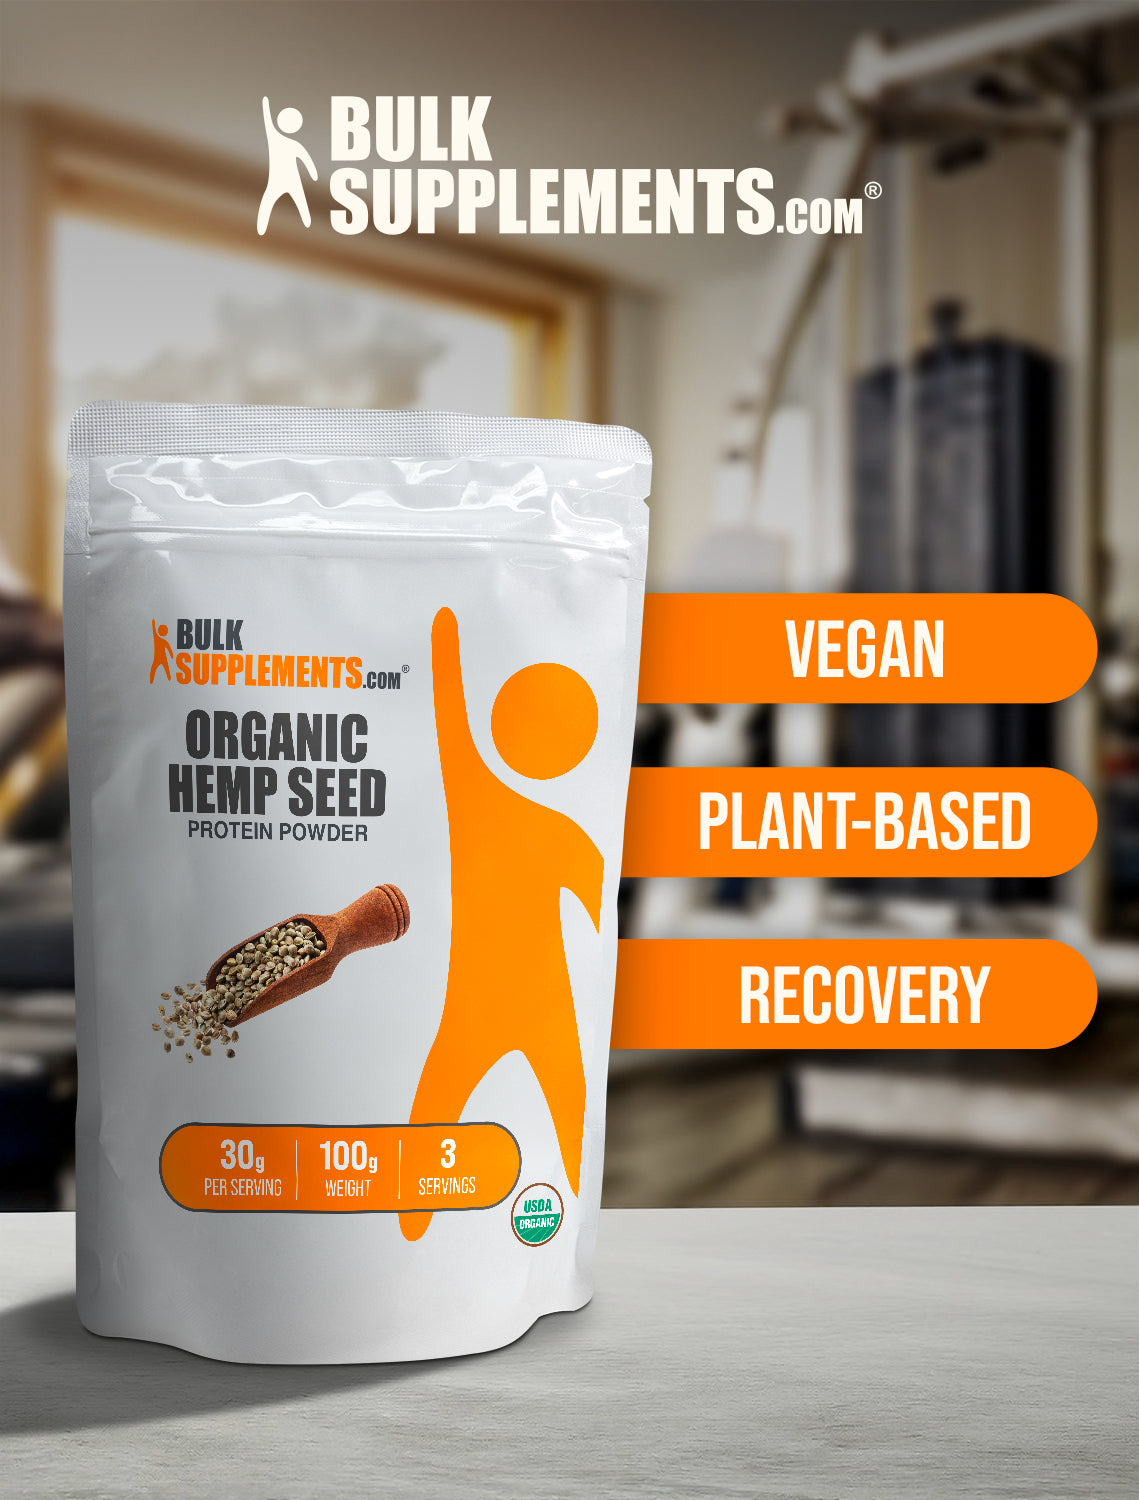 Organic hemp seed protein powder keyword image 100g